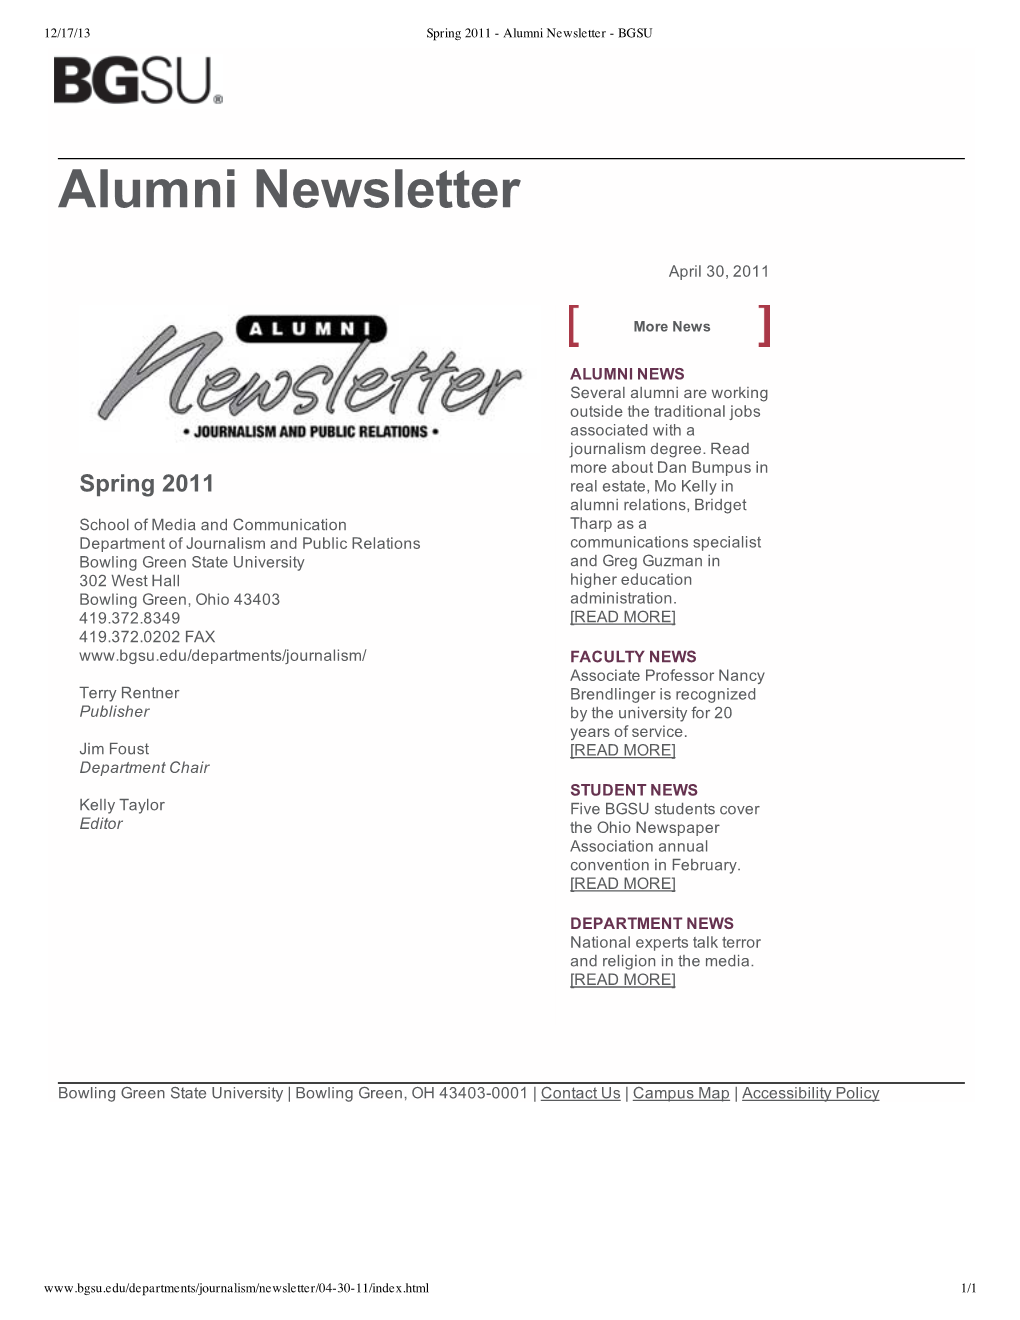 Alumni Newsletter - BGSU